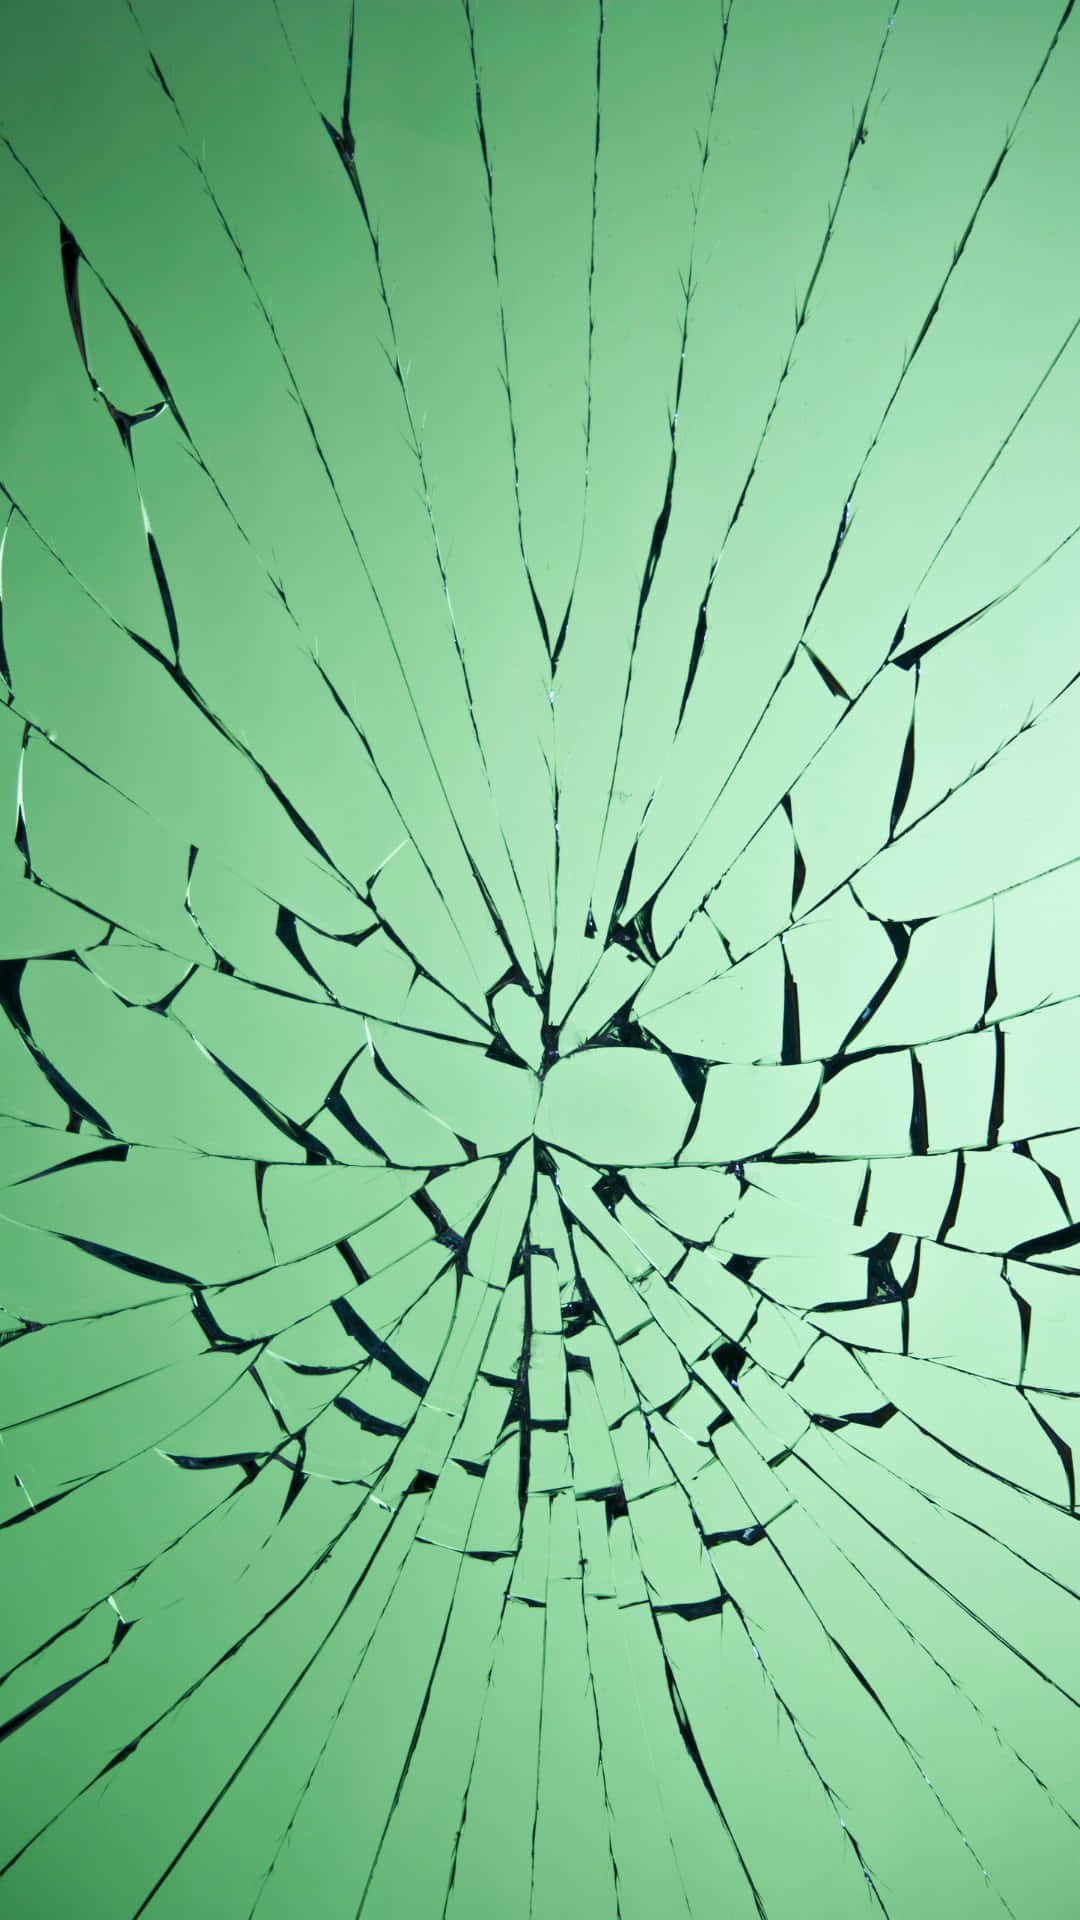 Cracked_ Glass_ Texture_ Green_ Background.jpg Wallpaper